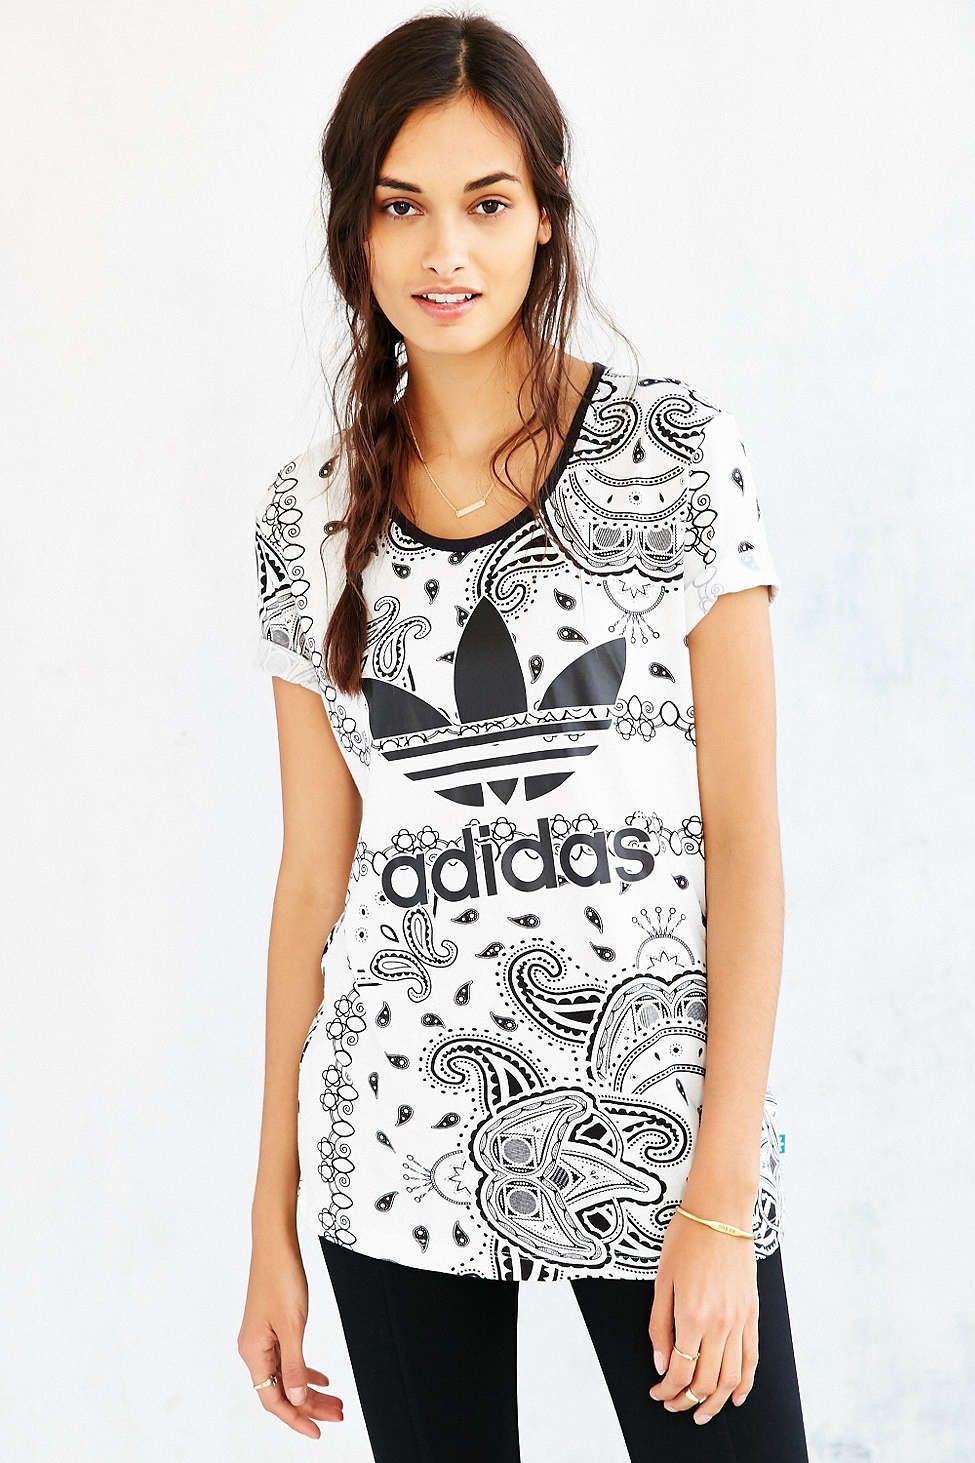 Adidas Paisley Logo - adidas Originals Paisley Tee - Urban Outfitters | Fall Florals ...